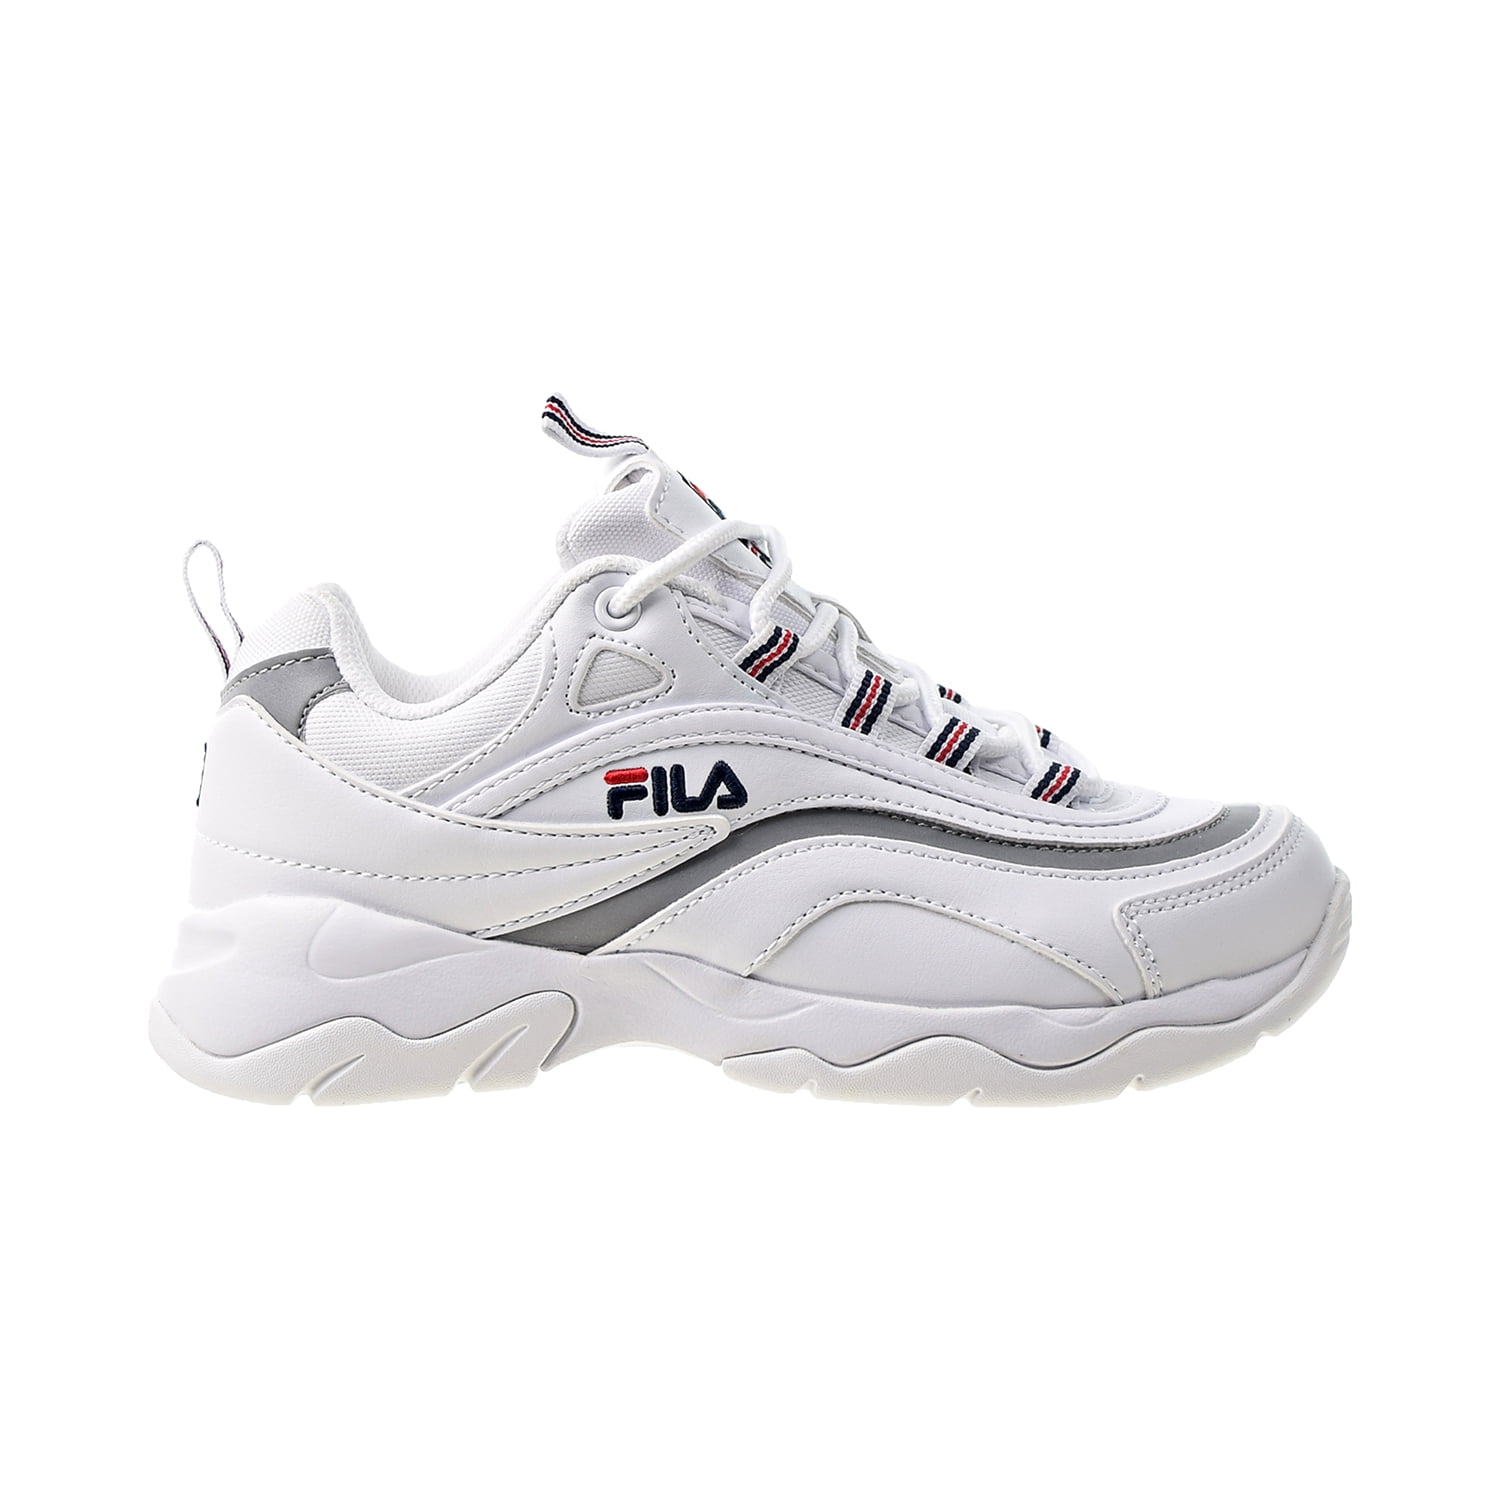 Fila Women's Ray White / Navy Metallic Silver Ankle-High Sneaker - 9M Walmart.com